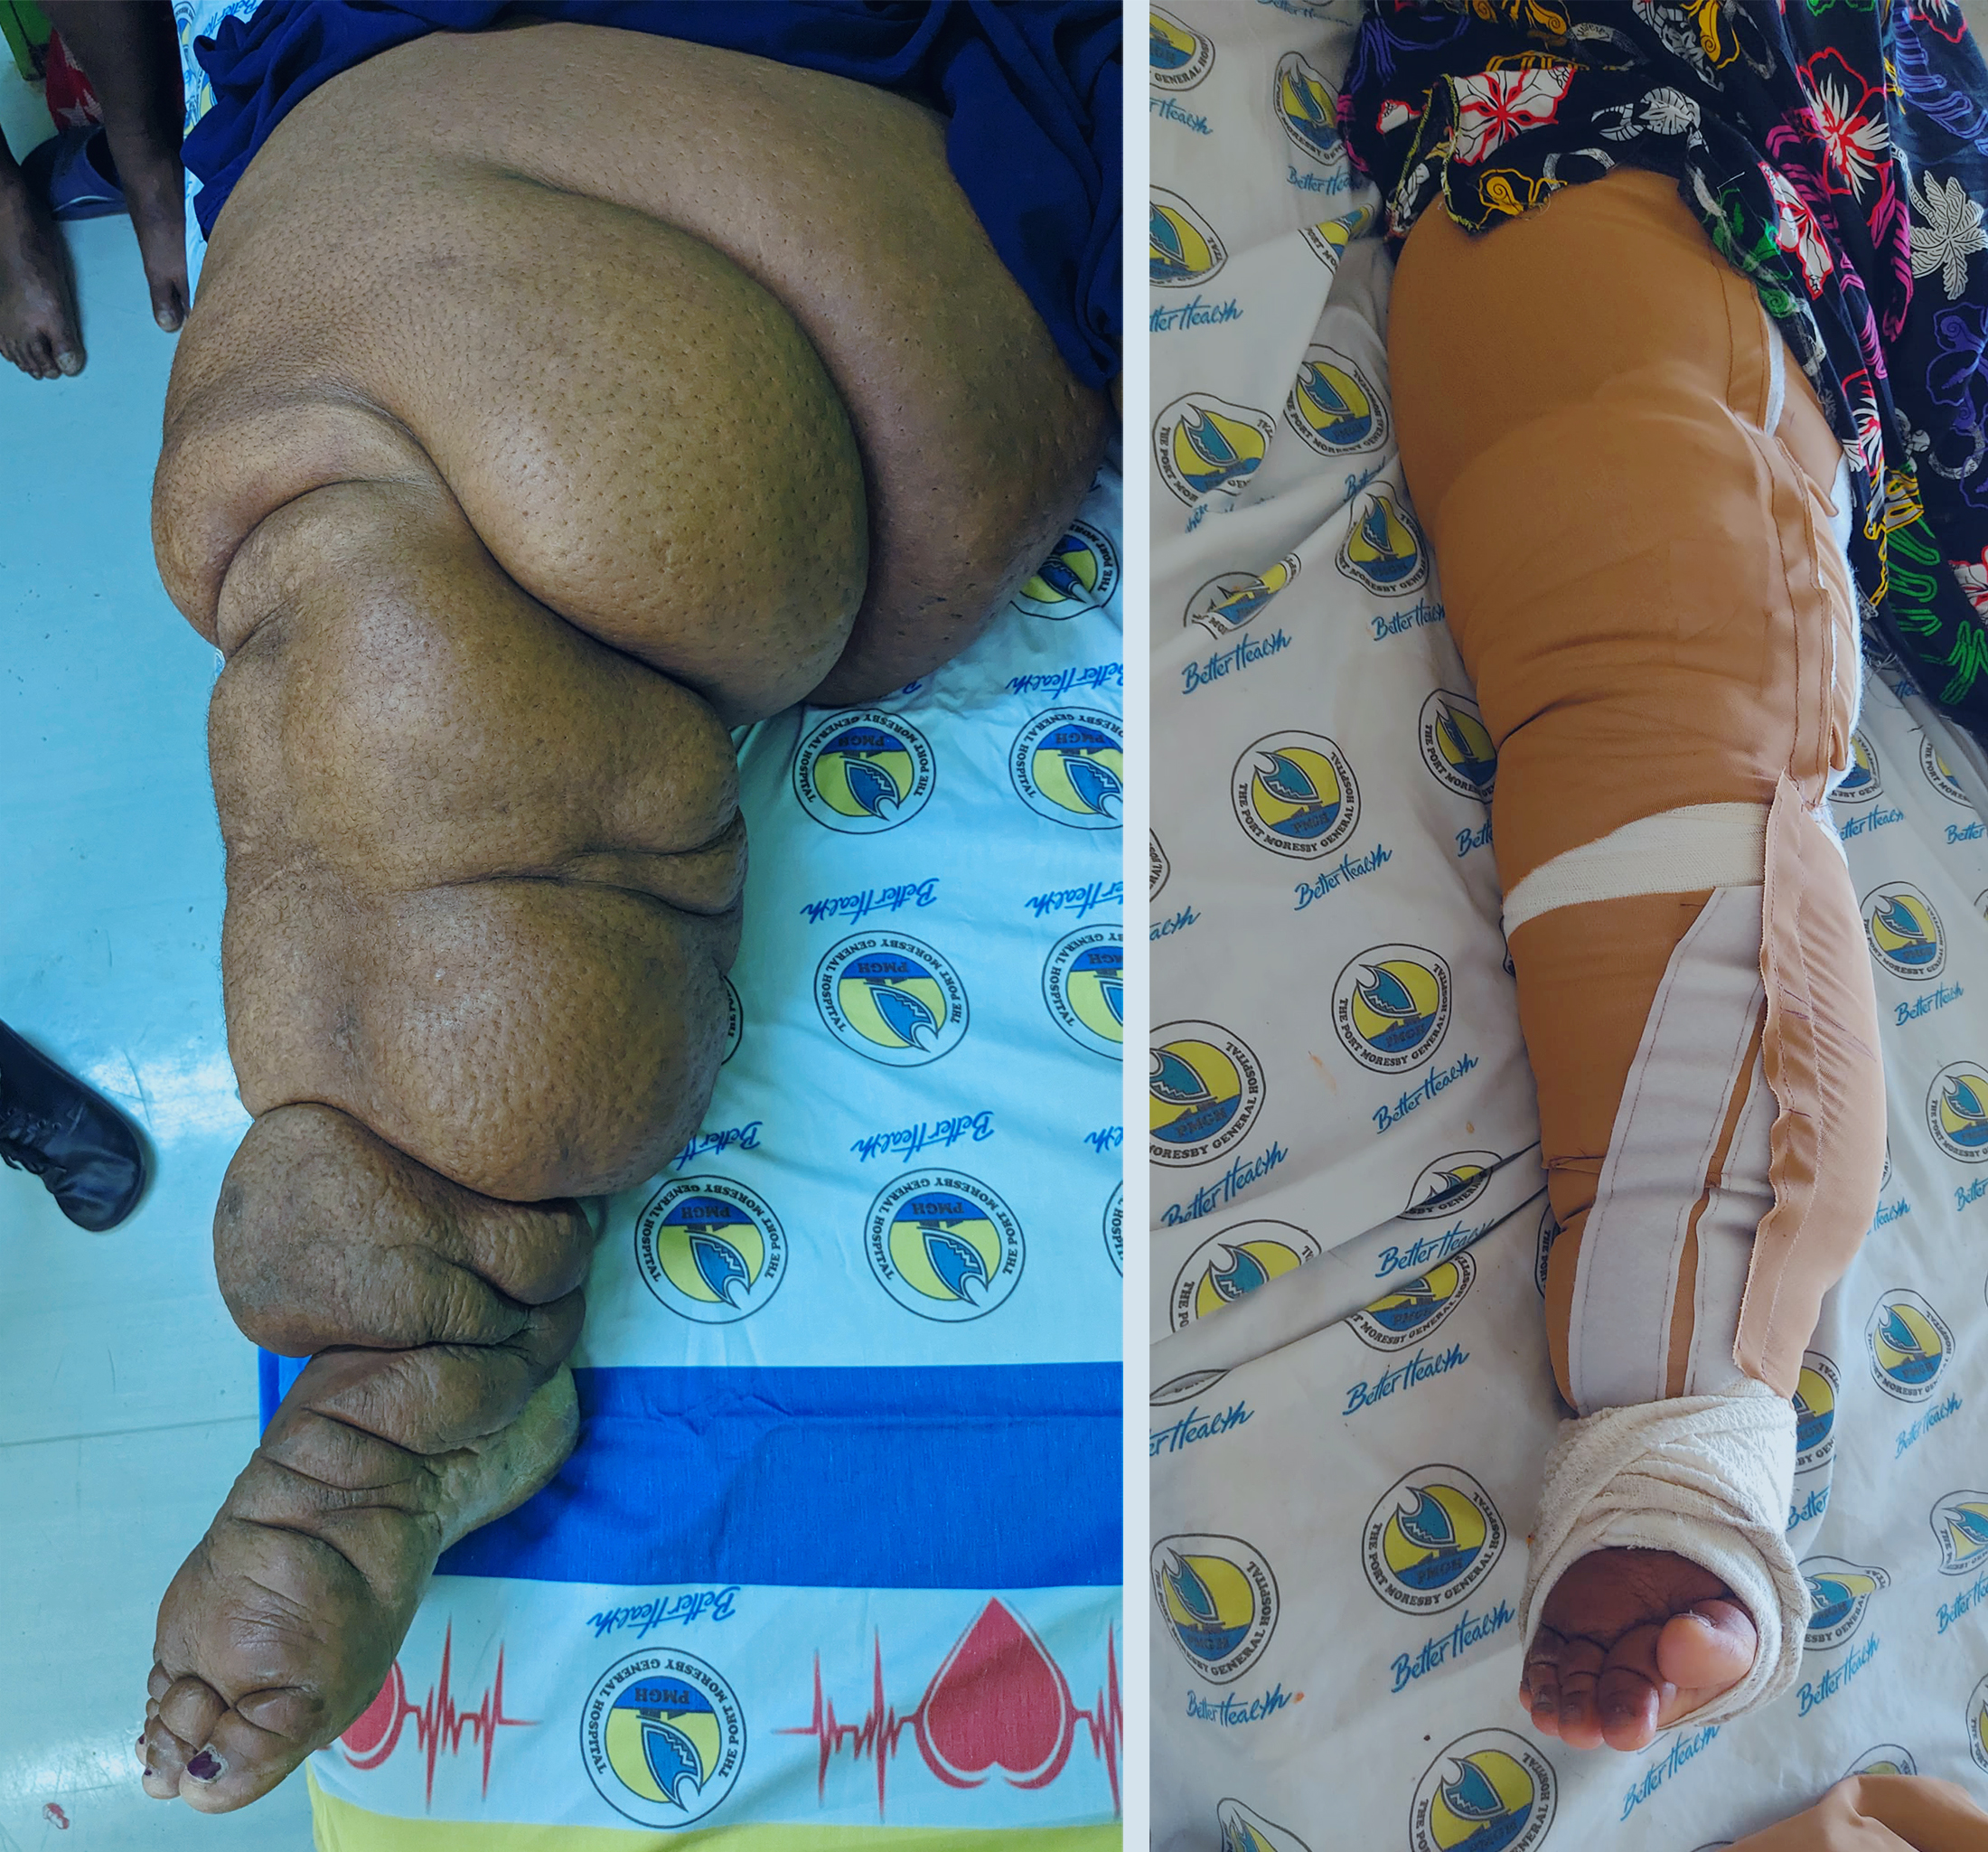 Two photos. Left: Christina’s large, swollen leg. Right: Christina’s leg reduced in size, dressed in her compression garment.